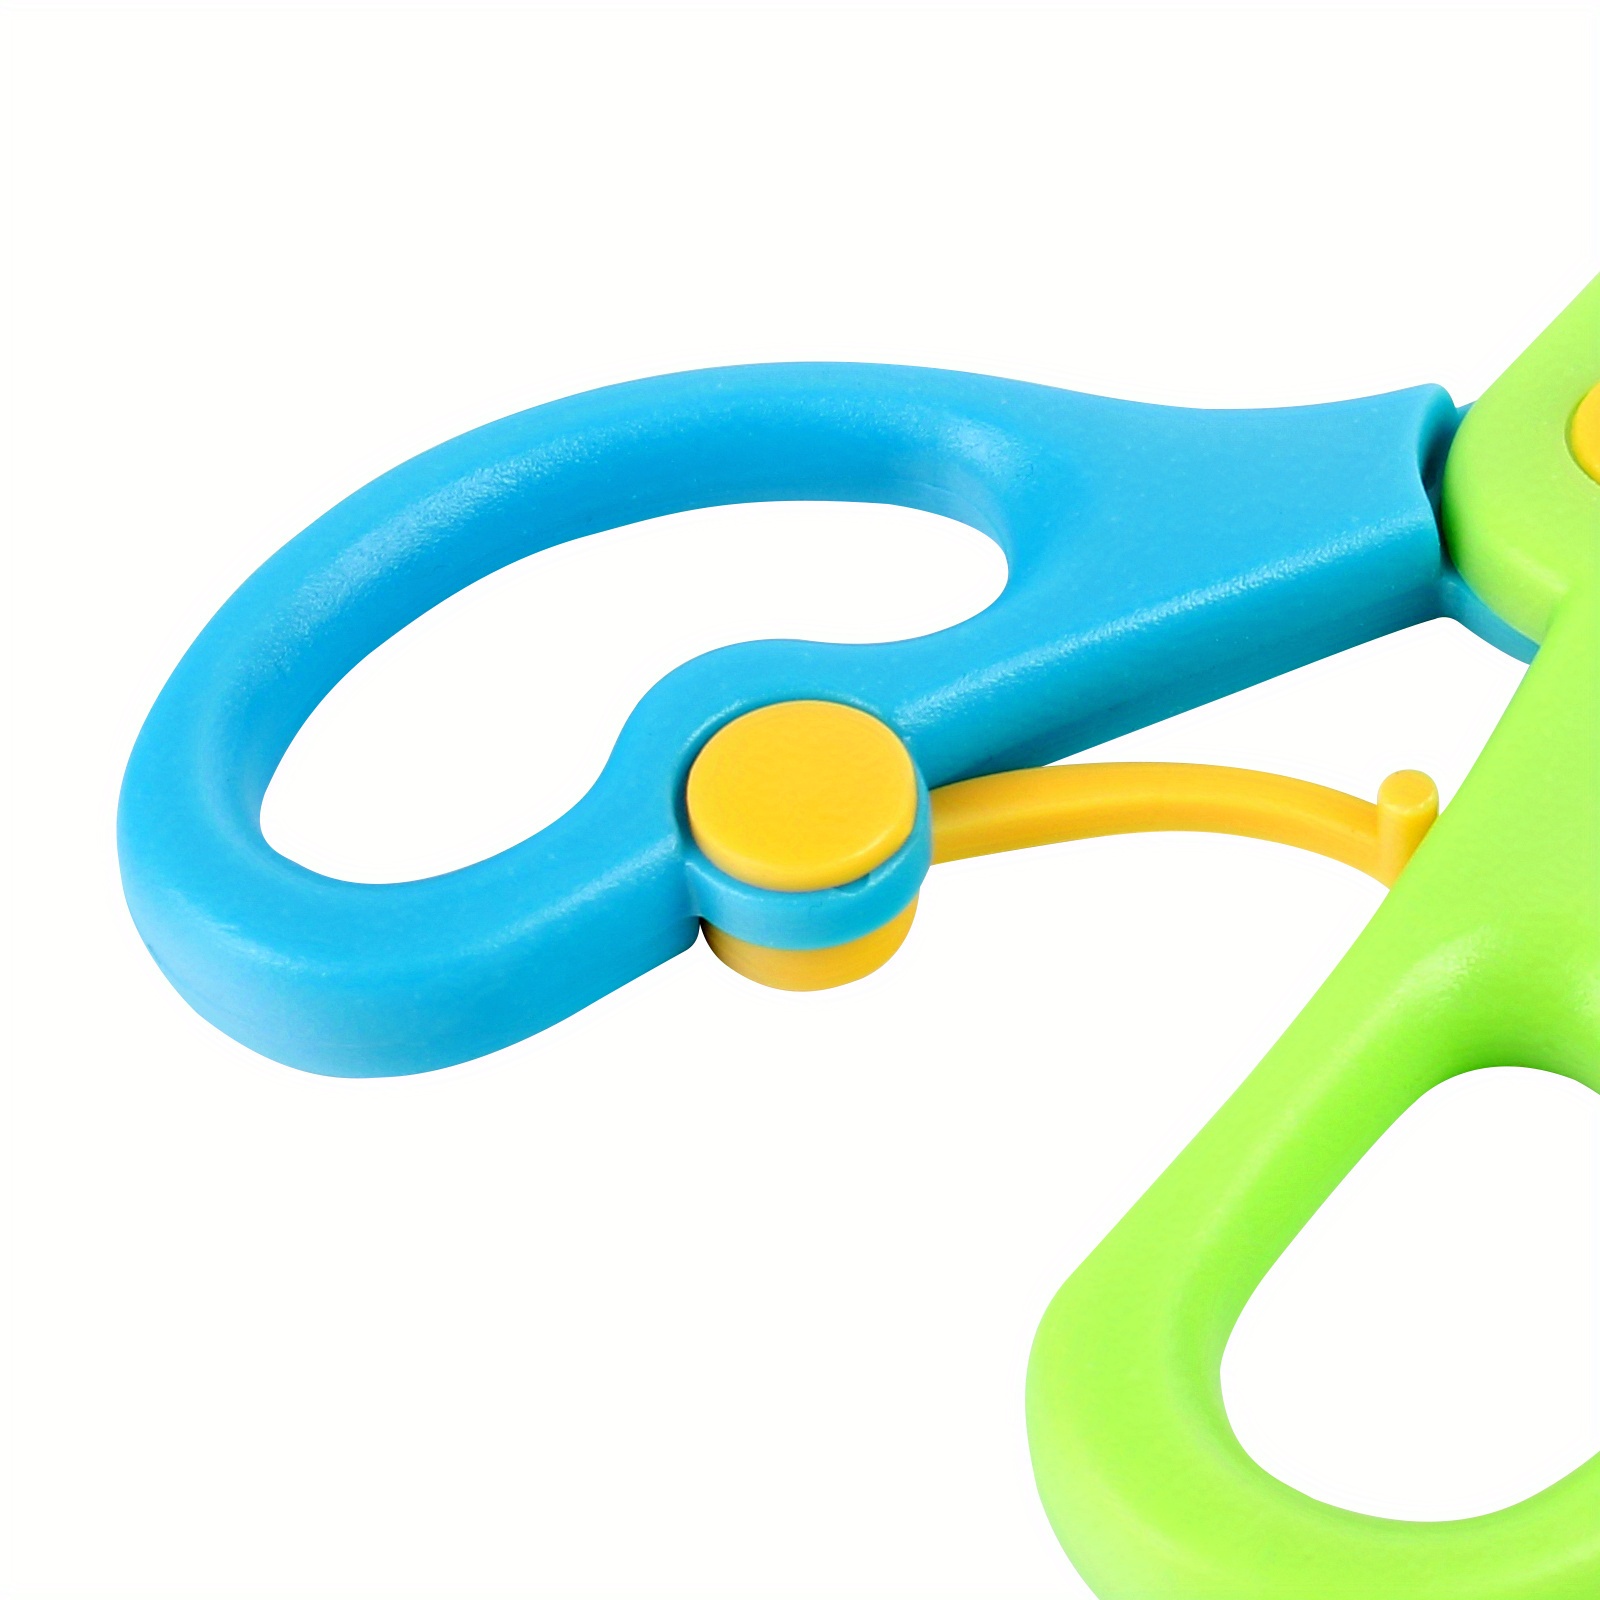 Cute Cartoon Plastic Safety Scissors for Kids Children -  Denmark